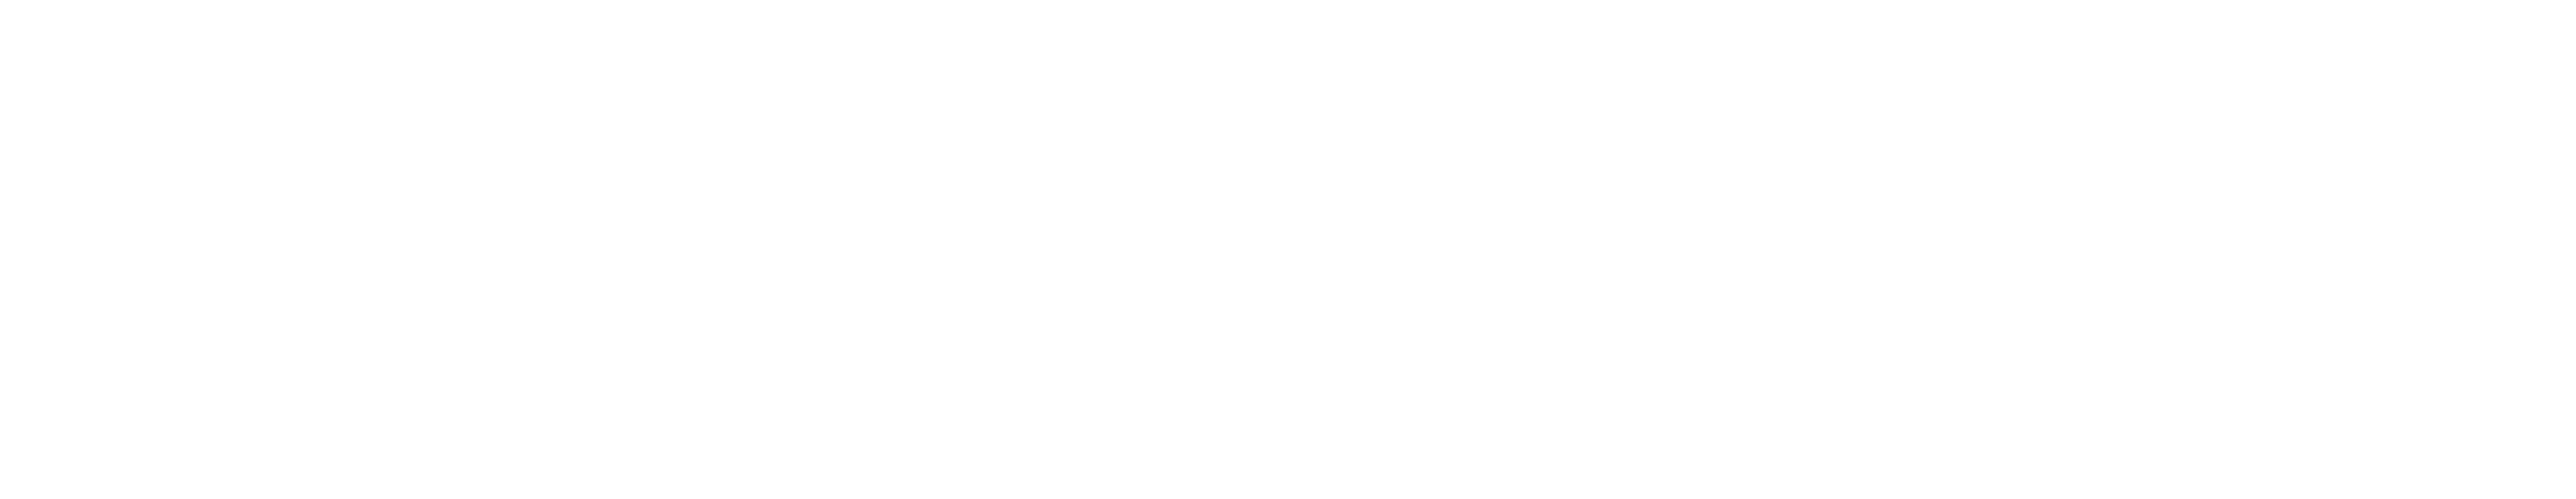 IWLEX 2025 logo and show dates.